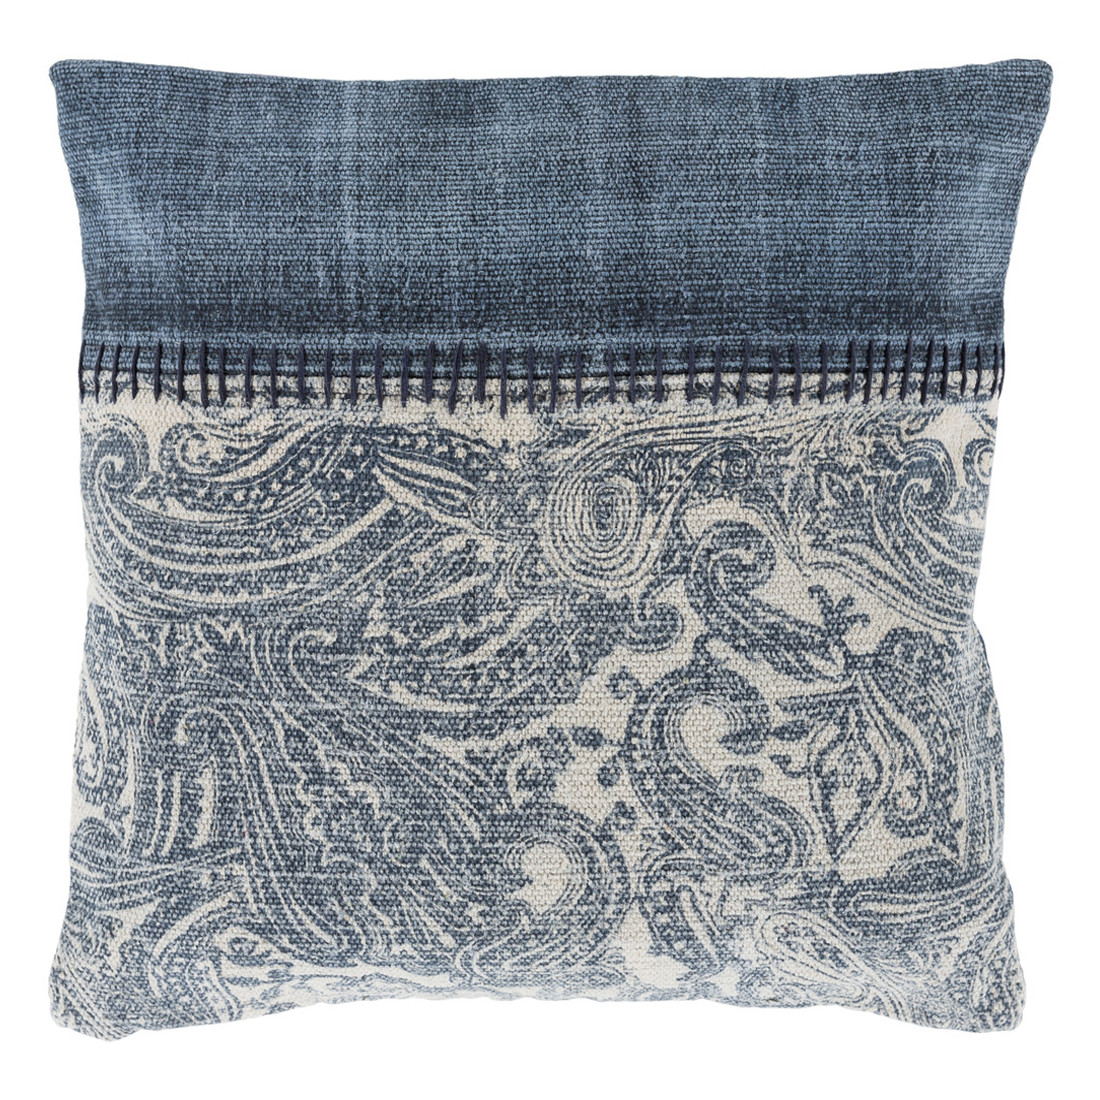 Hmong Teev Pillow - LL-009
20 x 20 inches
Cotton